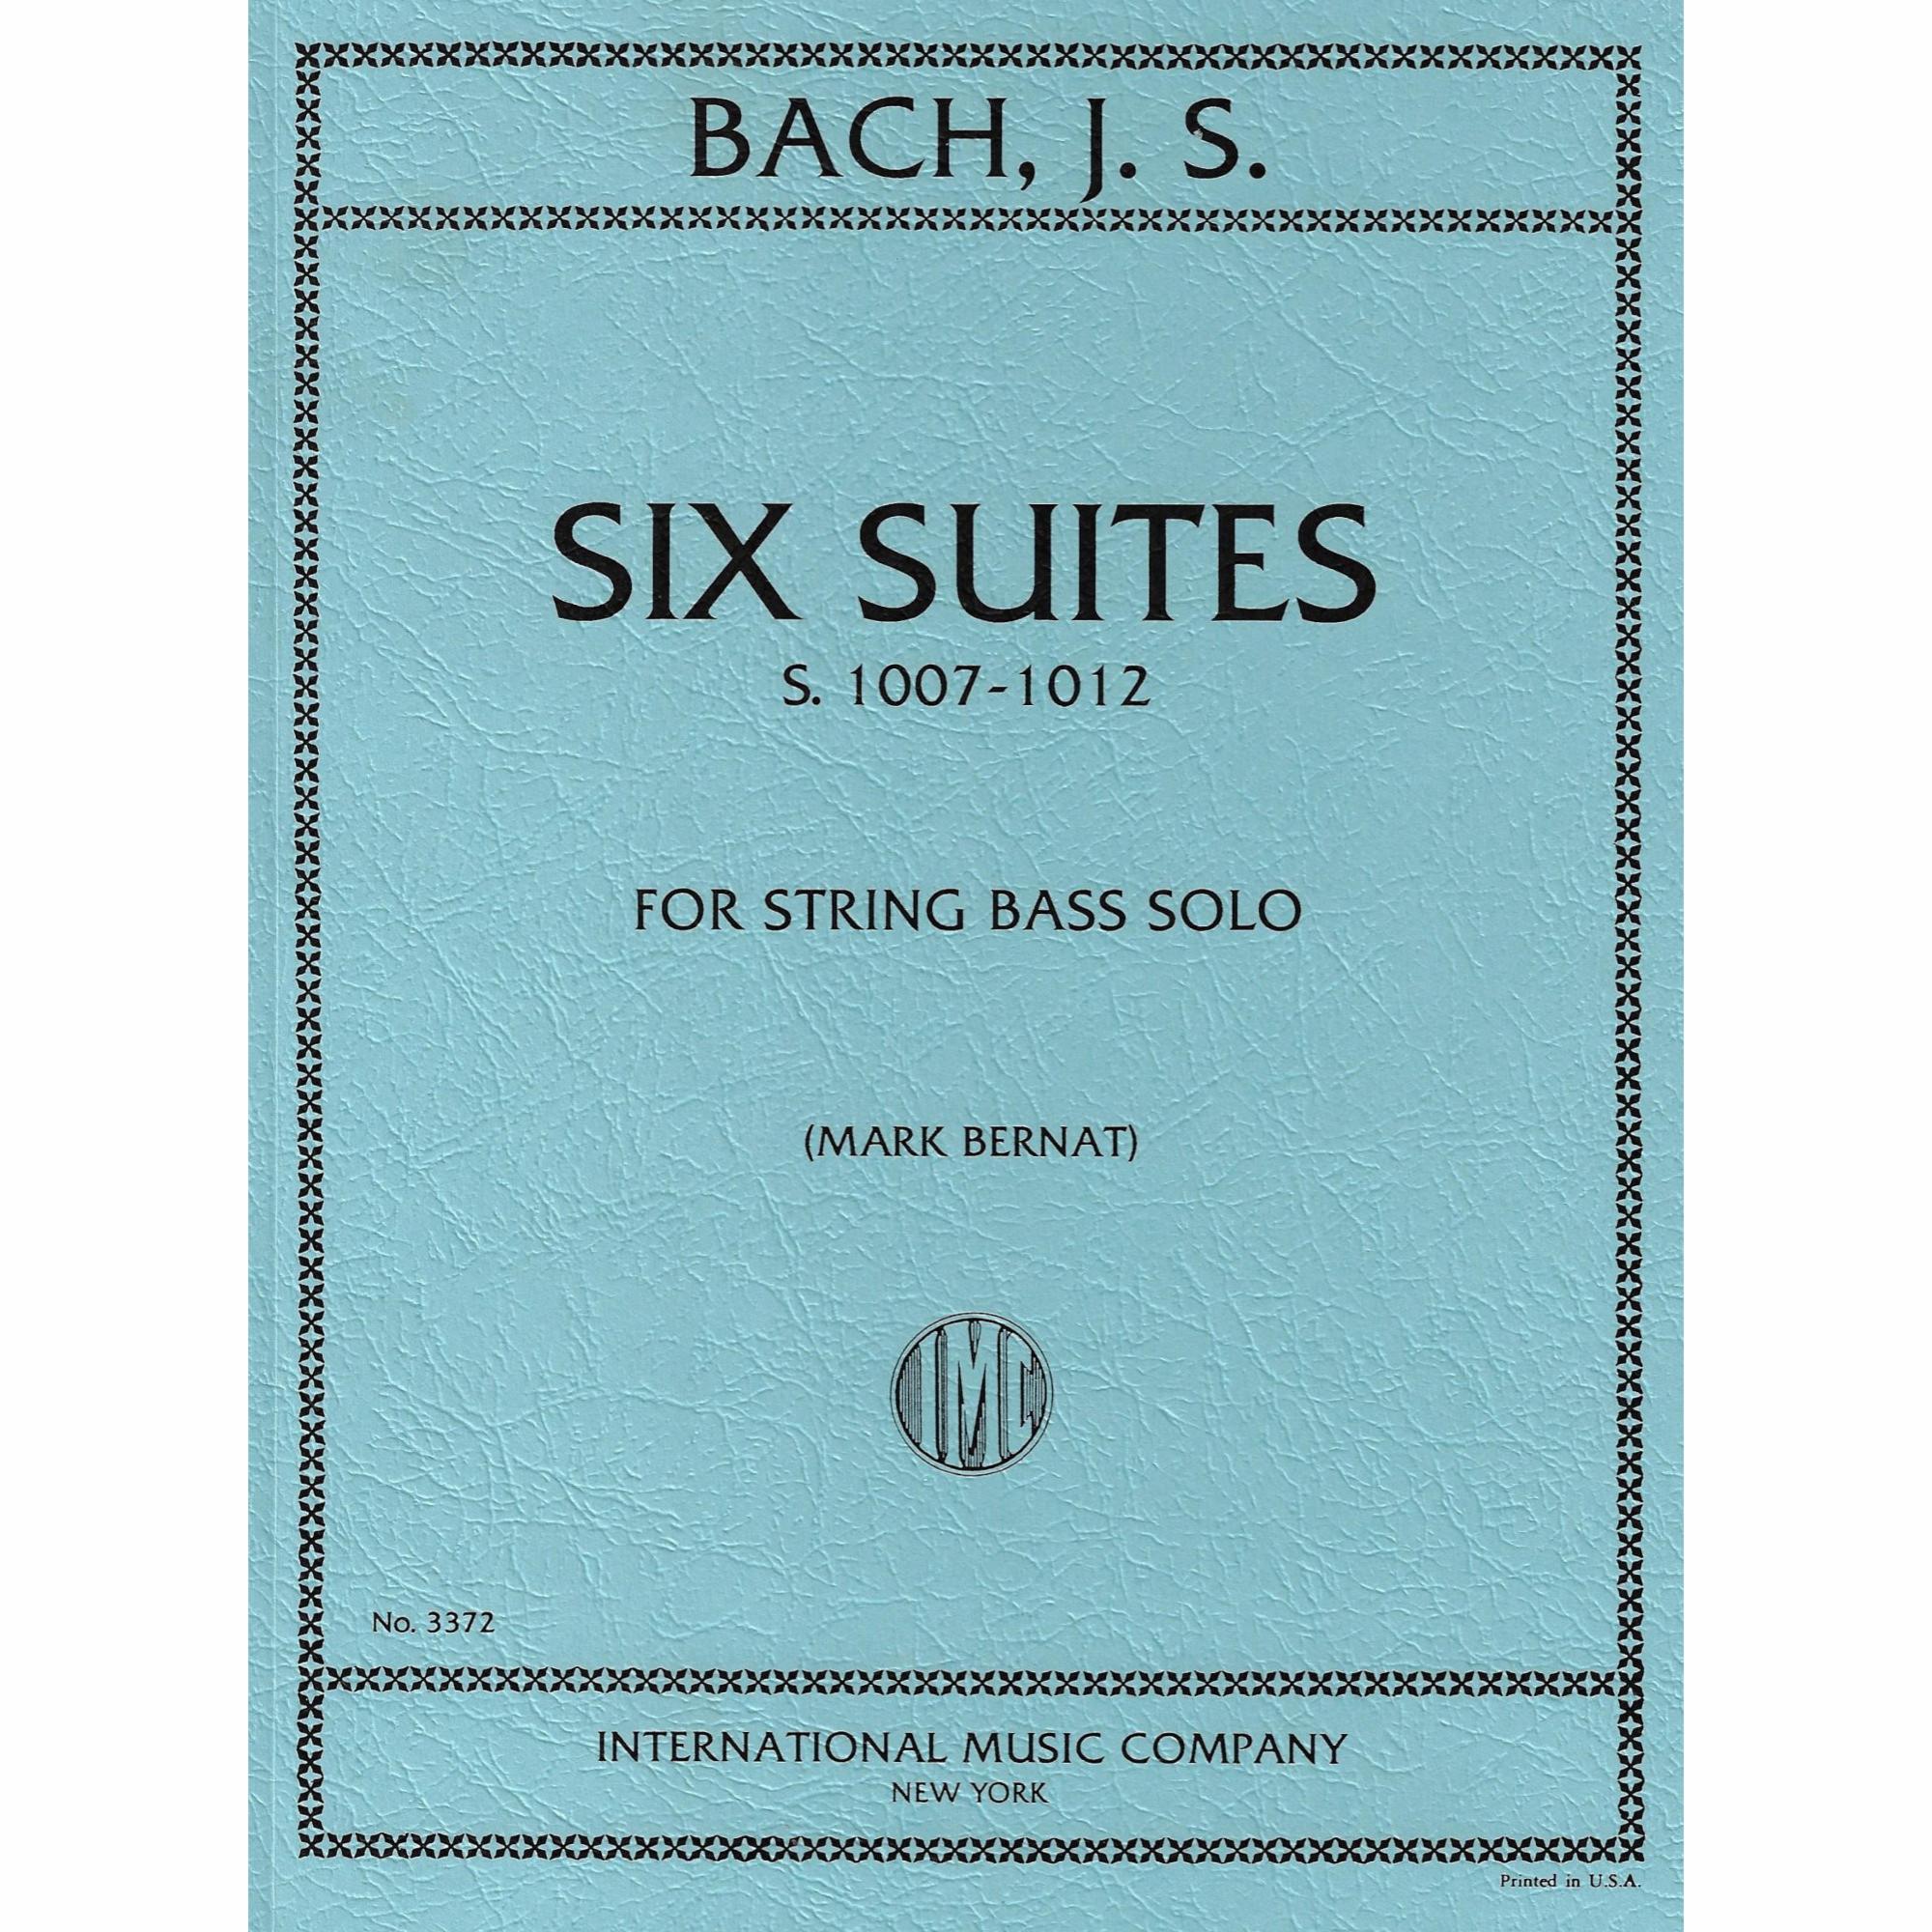 Six Cello Suites, BWV 1007-12 arr. for Bass